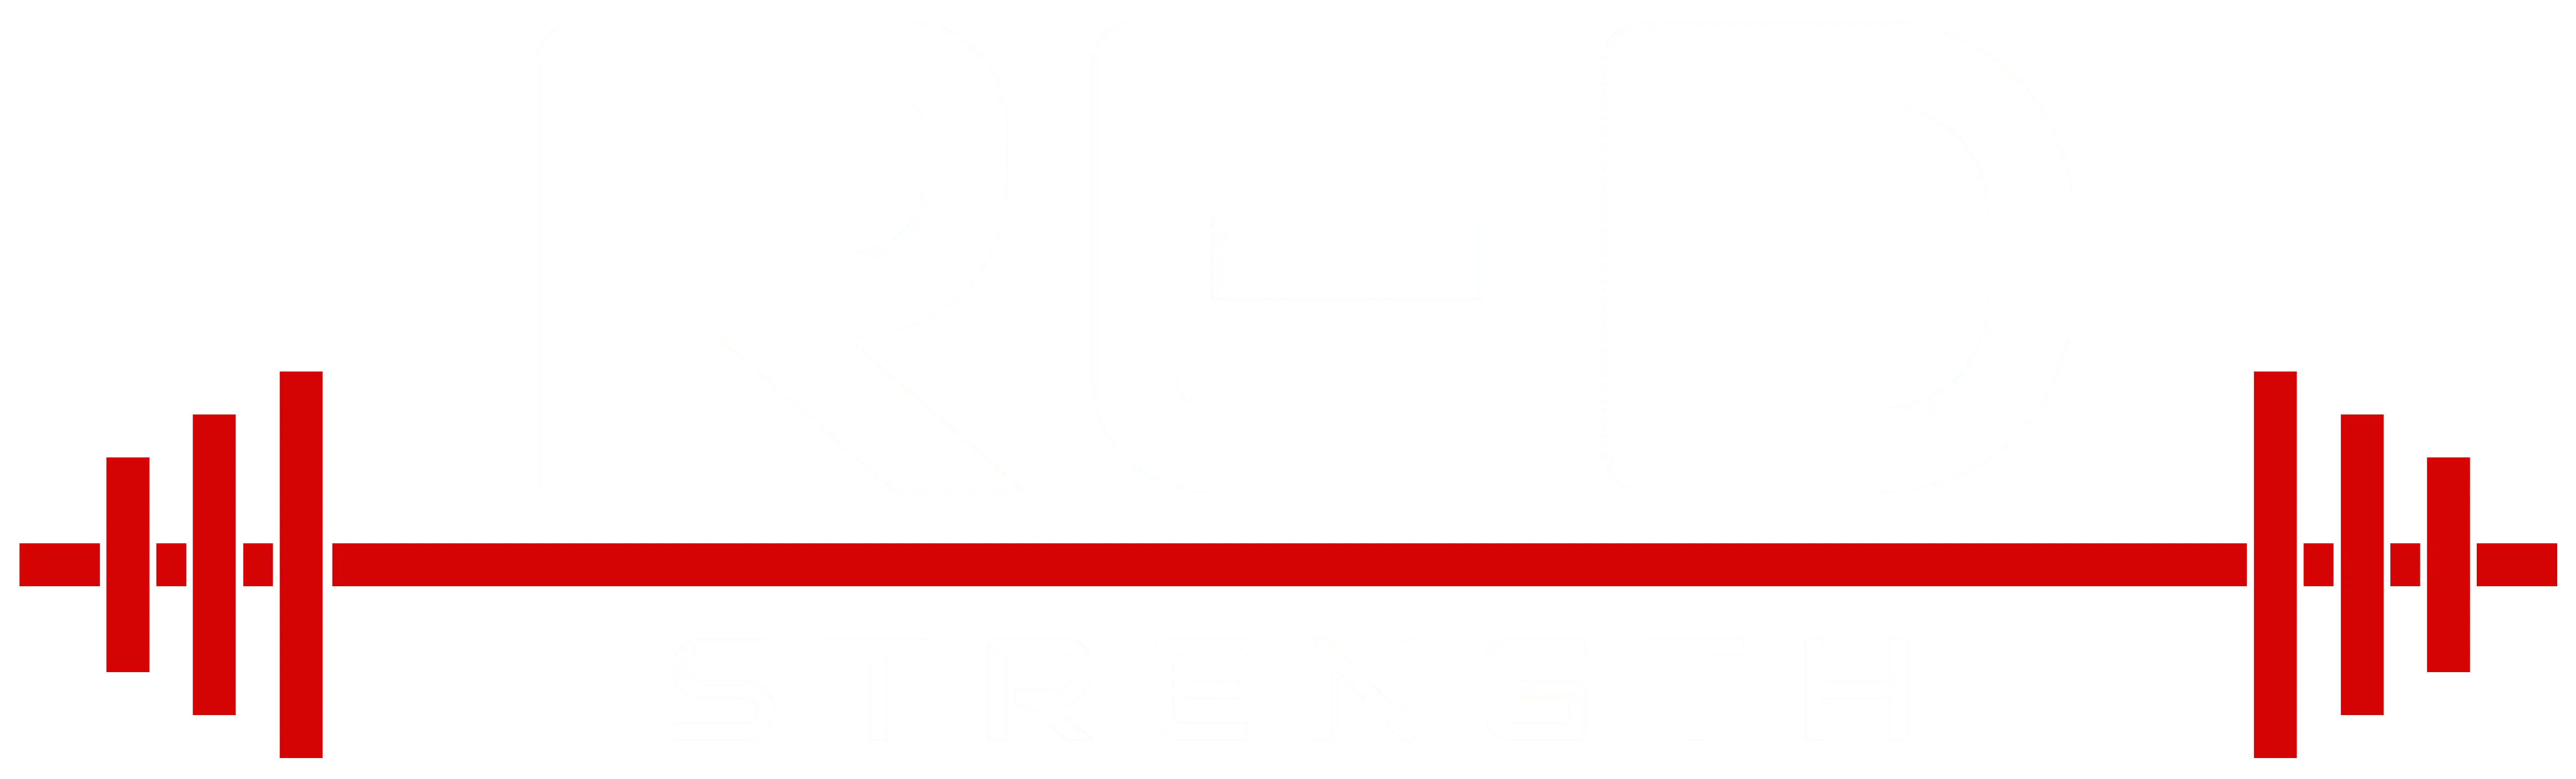 red strength logo white on transparent